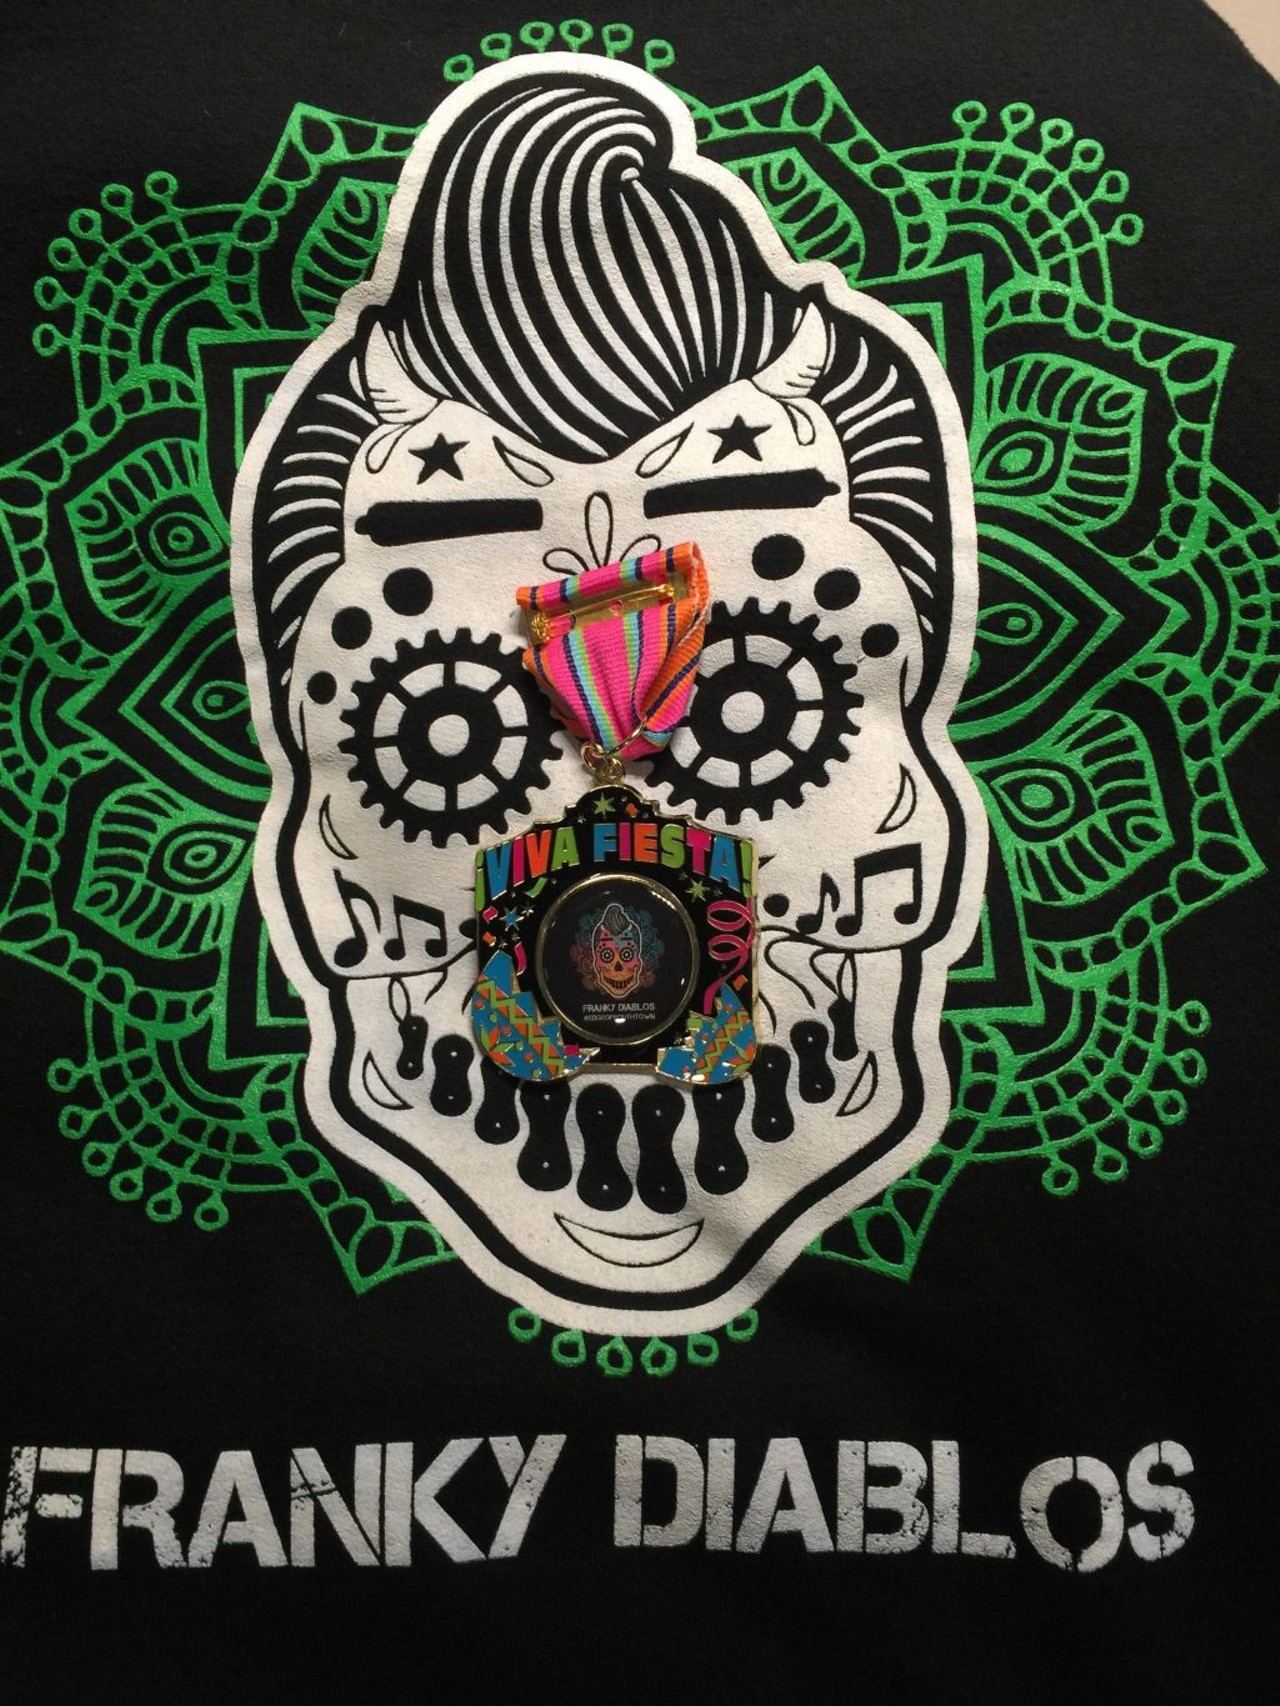 Franky Diablo's
$10
Sold at Franky Diablo's Bar
1301 Roosevelt Ave 78210
facebook.com/frankydiablos